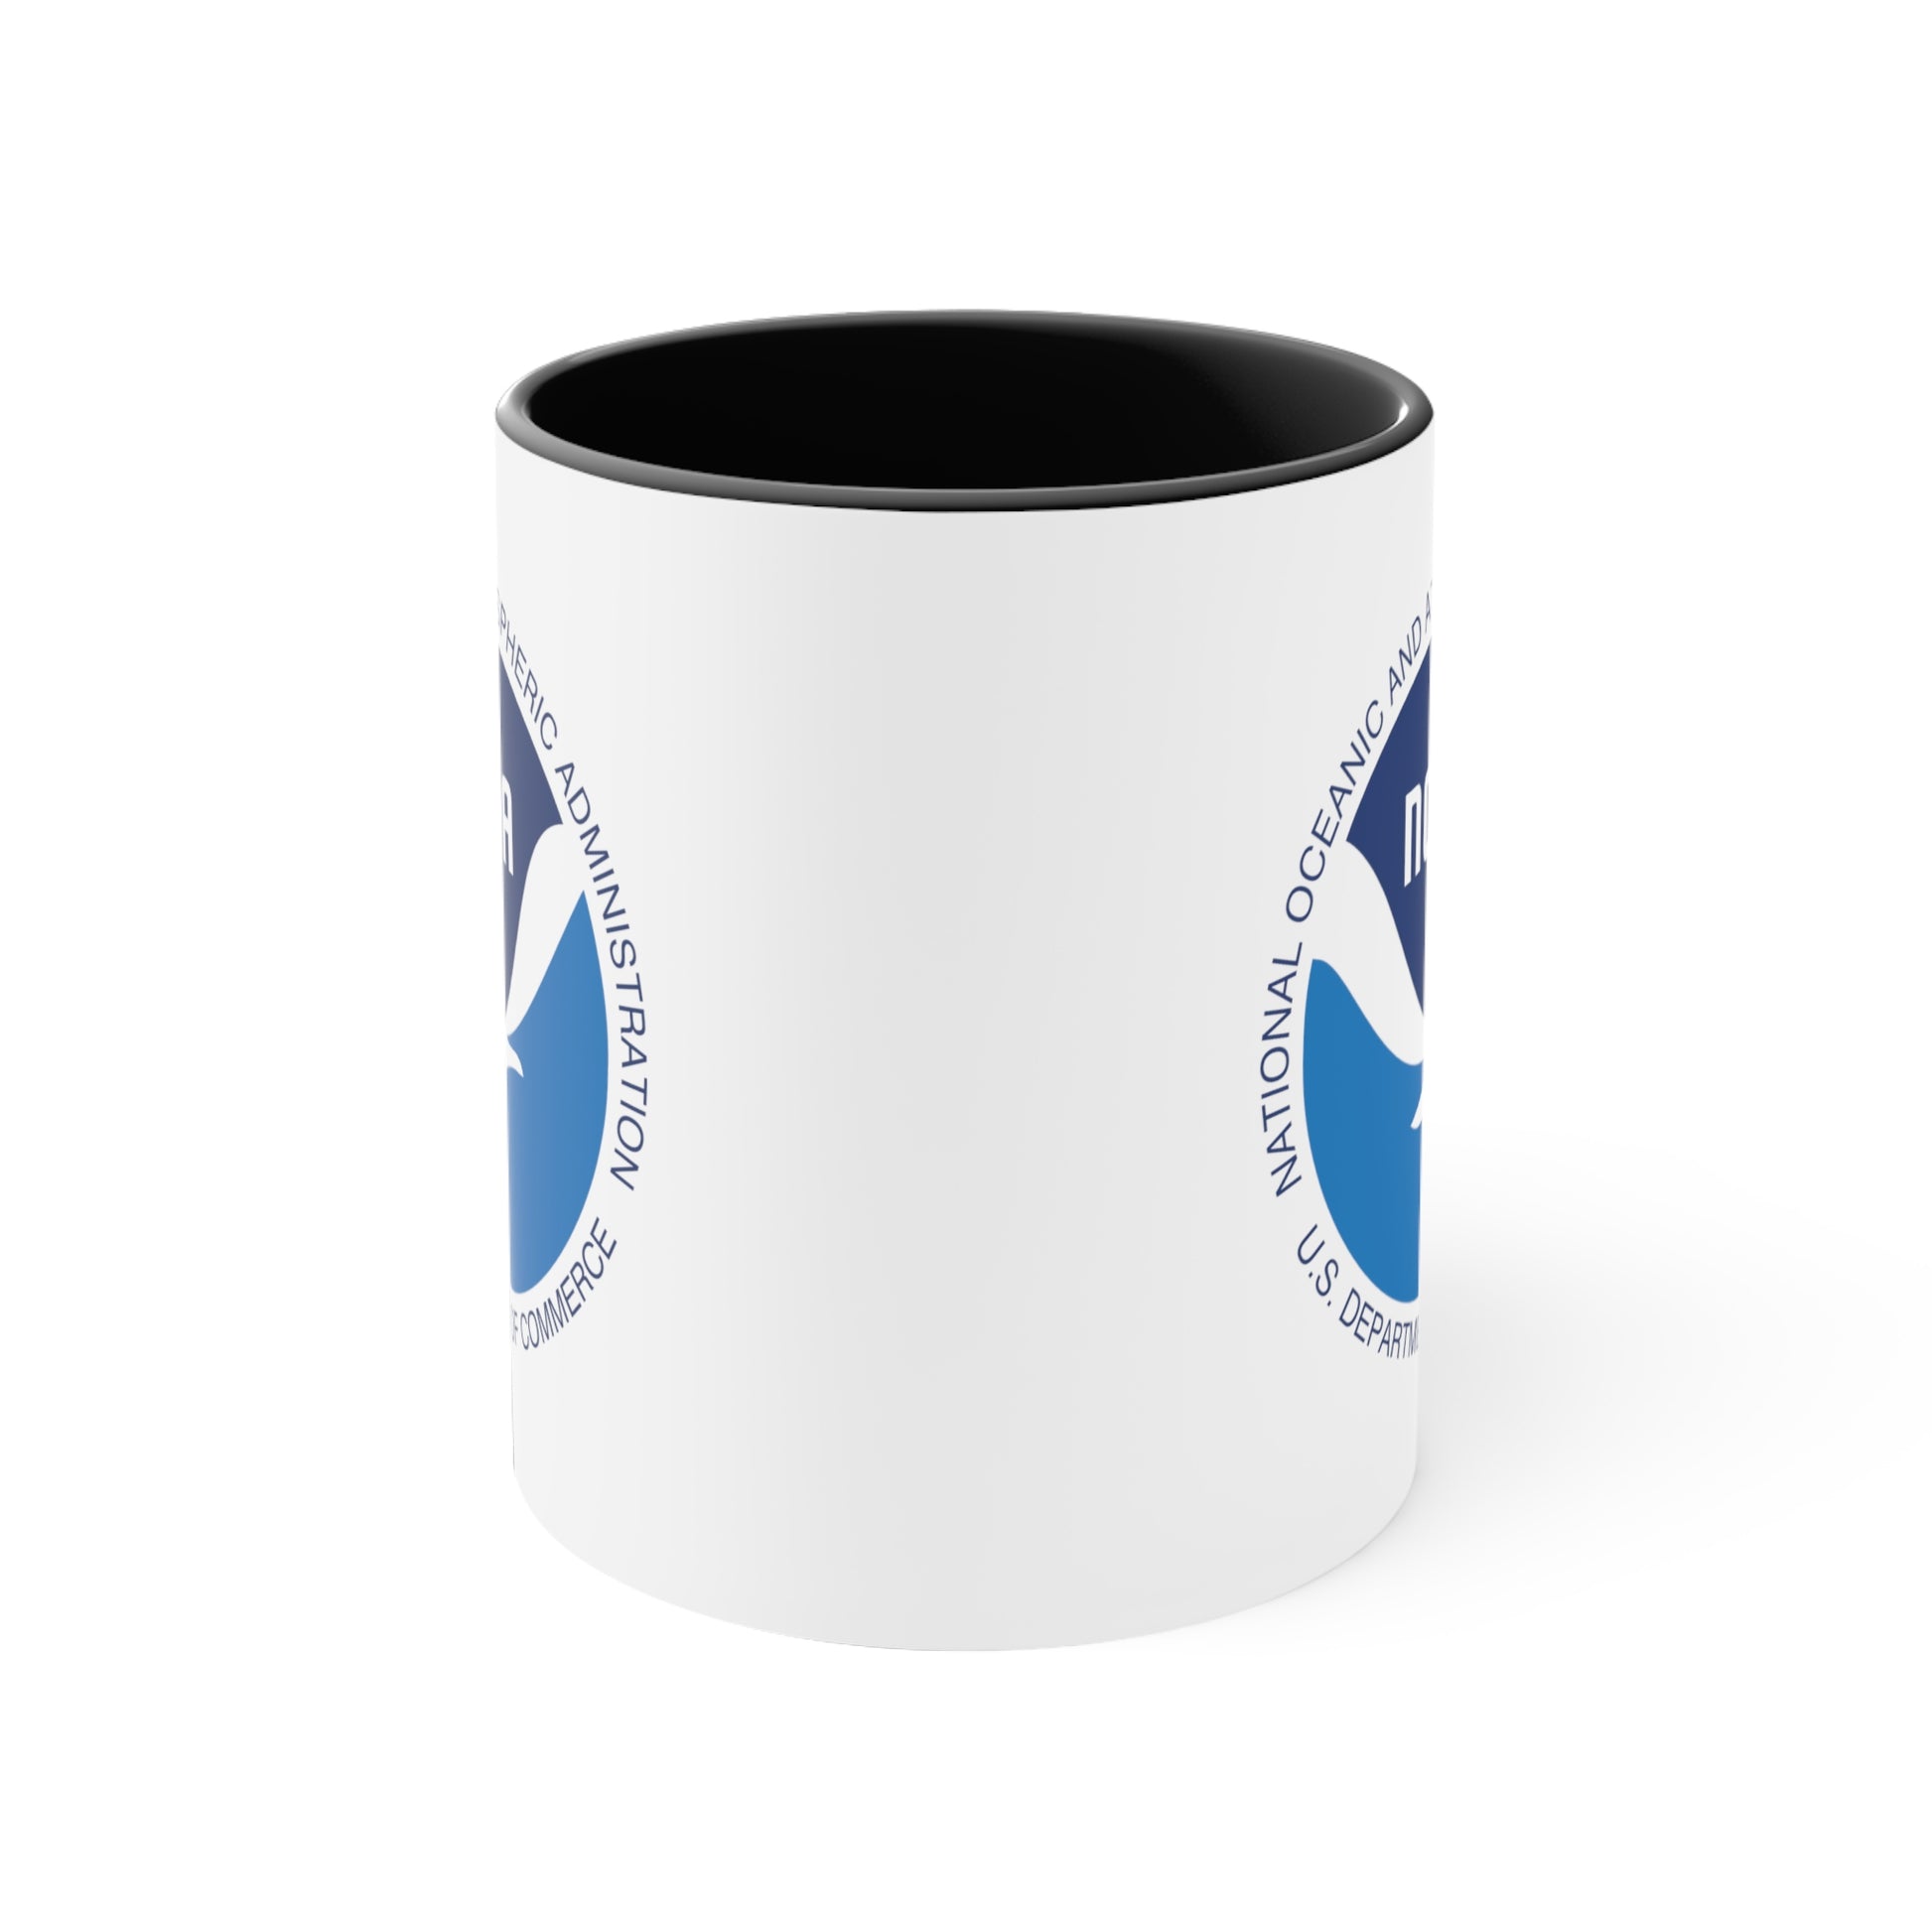 NOAA Logo Coffee Mug - Double Sided Black Accent White Ceramic 11oz by TheGlassyLass